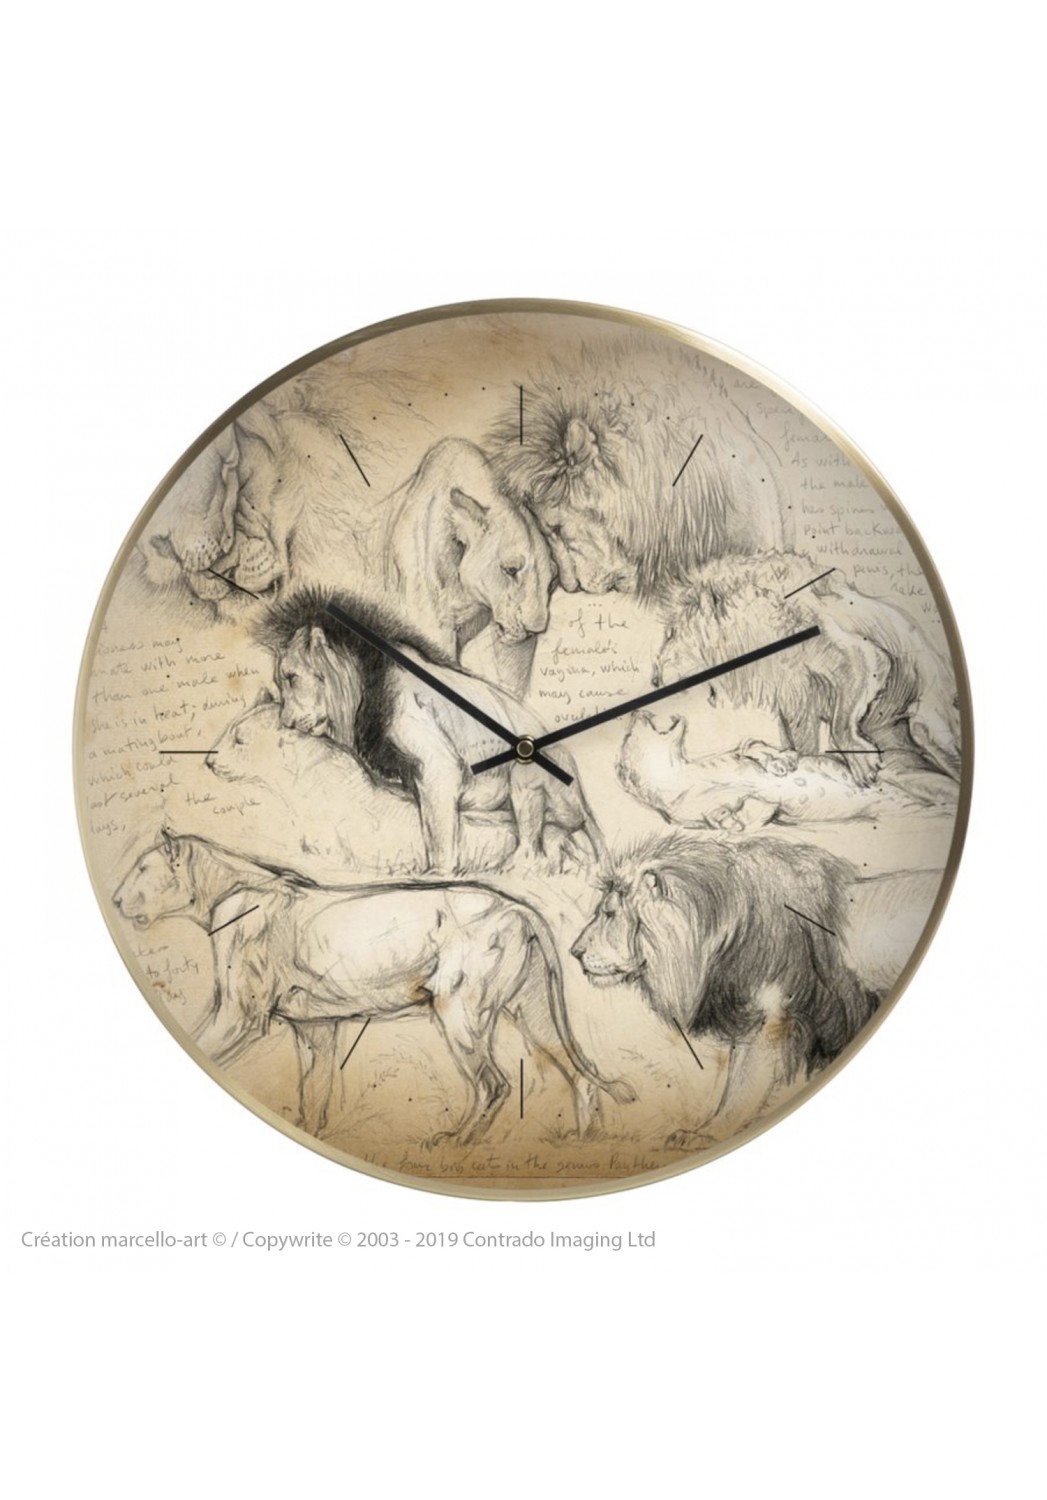 Marcello-art: Decoration accessoiries Wall clock 181 Mating lions